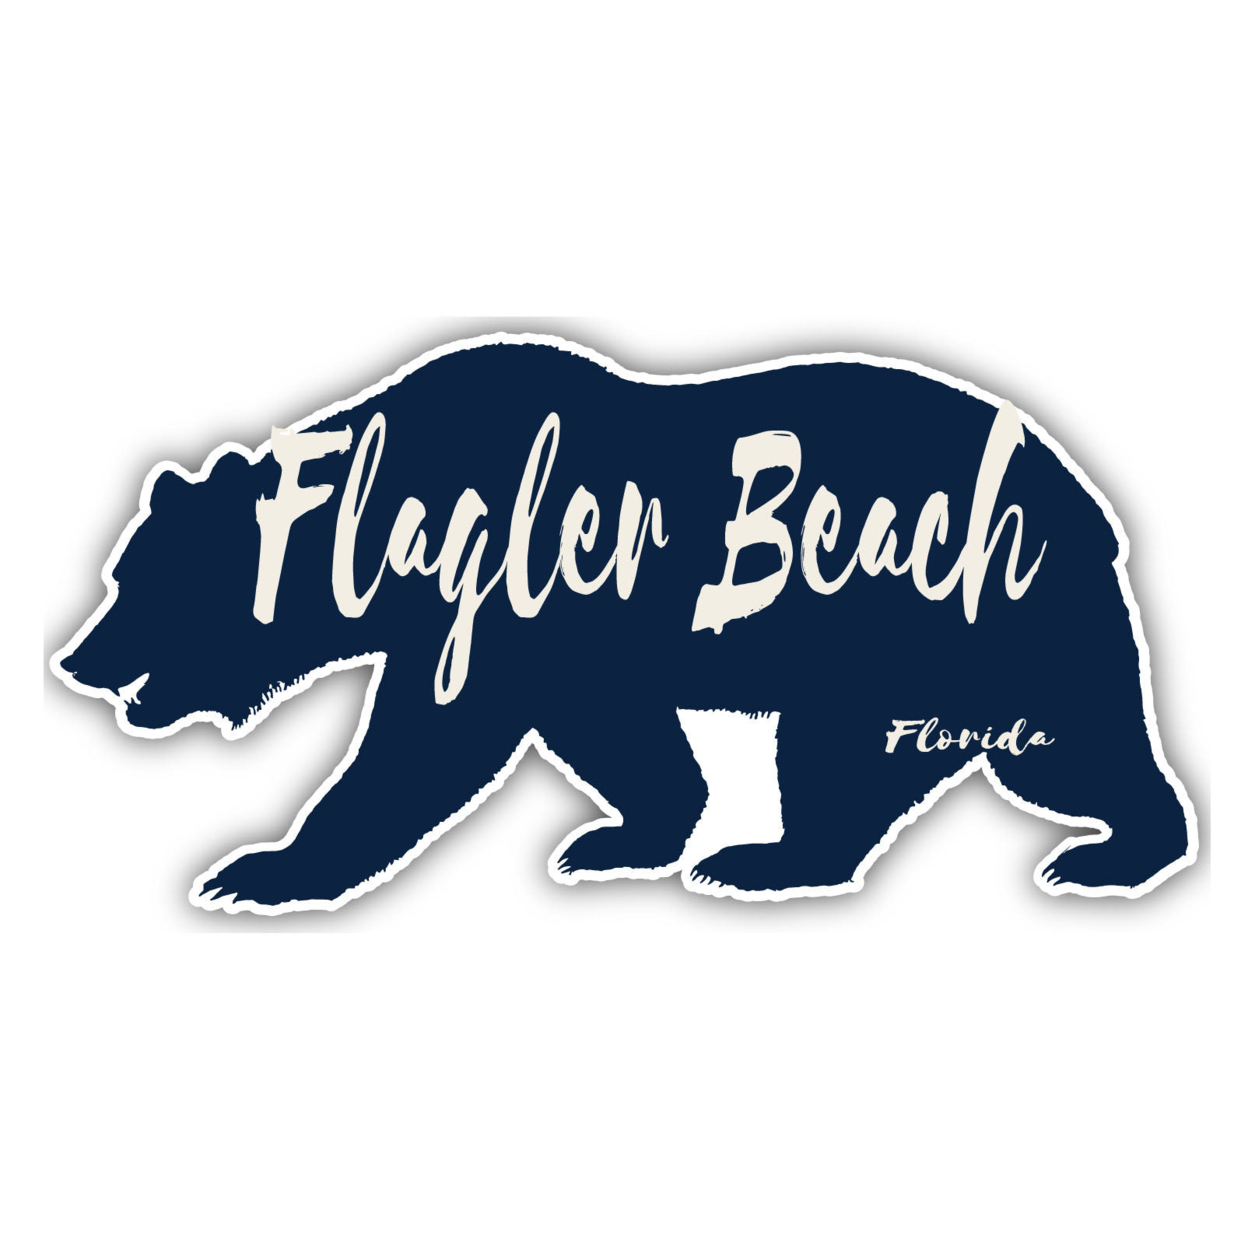 Flagler Beach Florida Souvenir Decorative Stickers (Choose Theme And Size) - Single Unit, 6-Inch, Tent